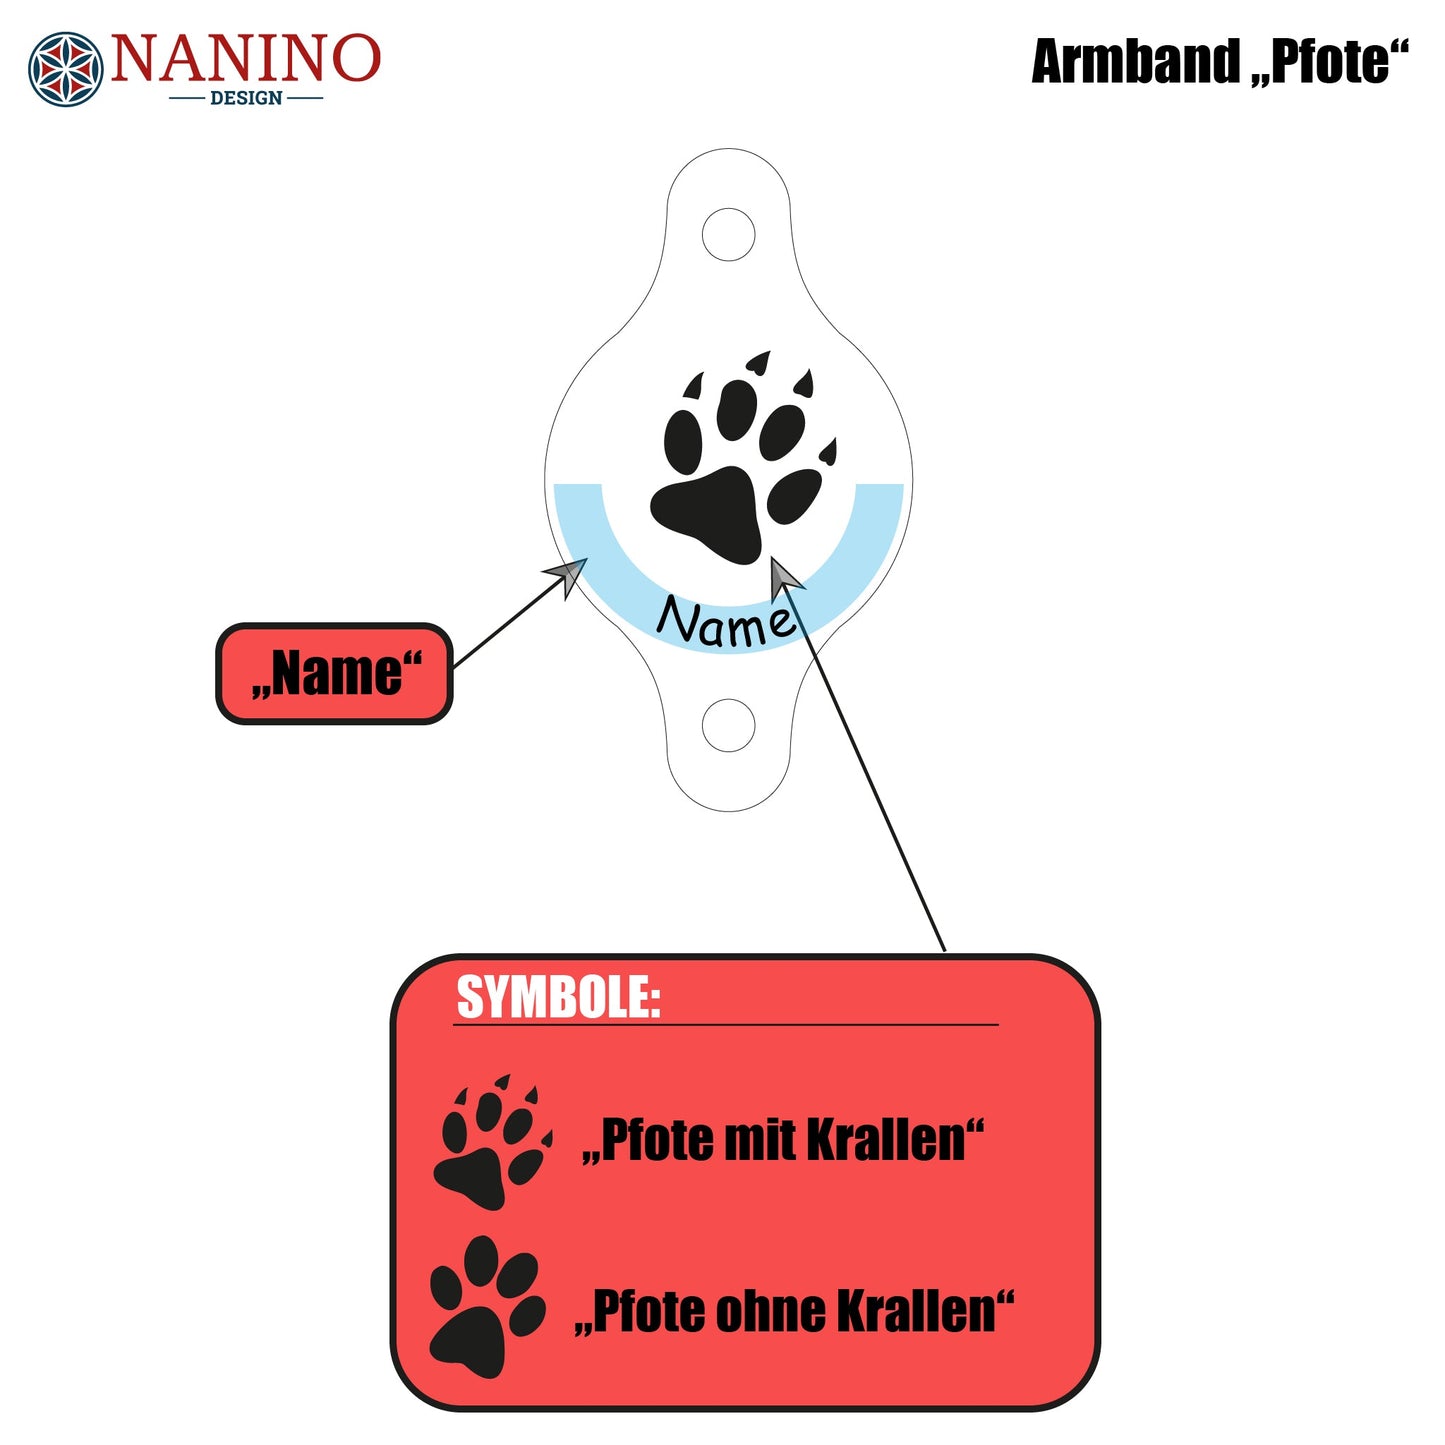 Armband "Pfote" personalisiert - Nanino Design Onlineshop -